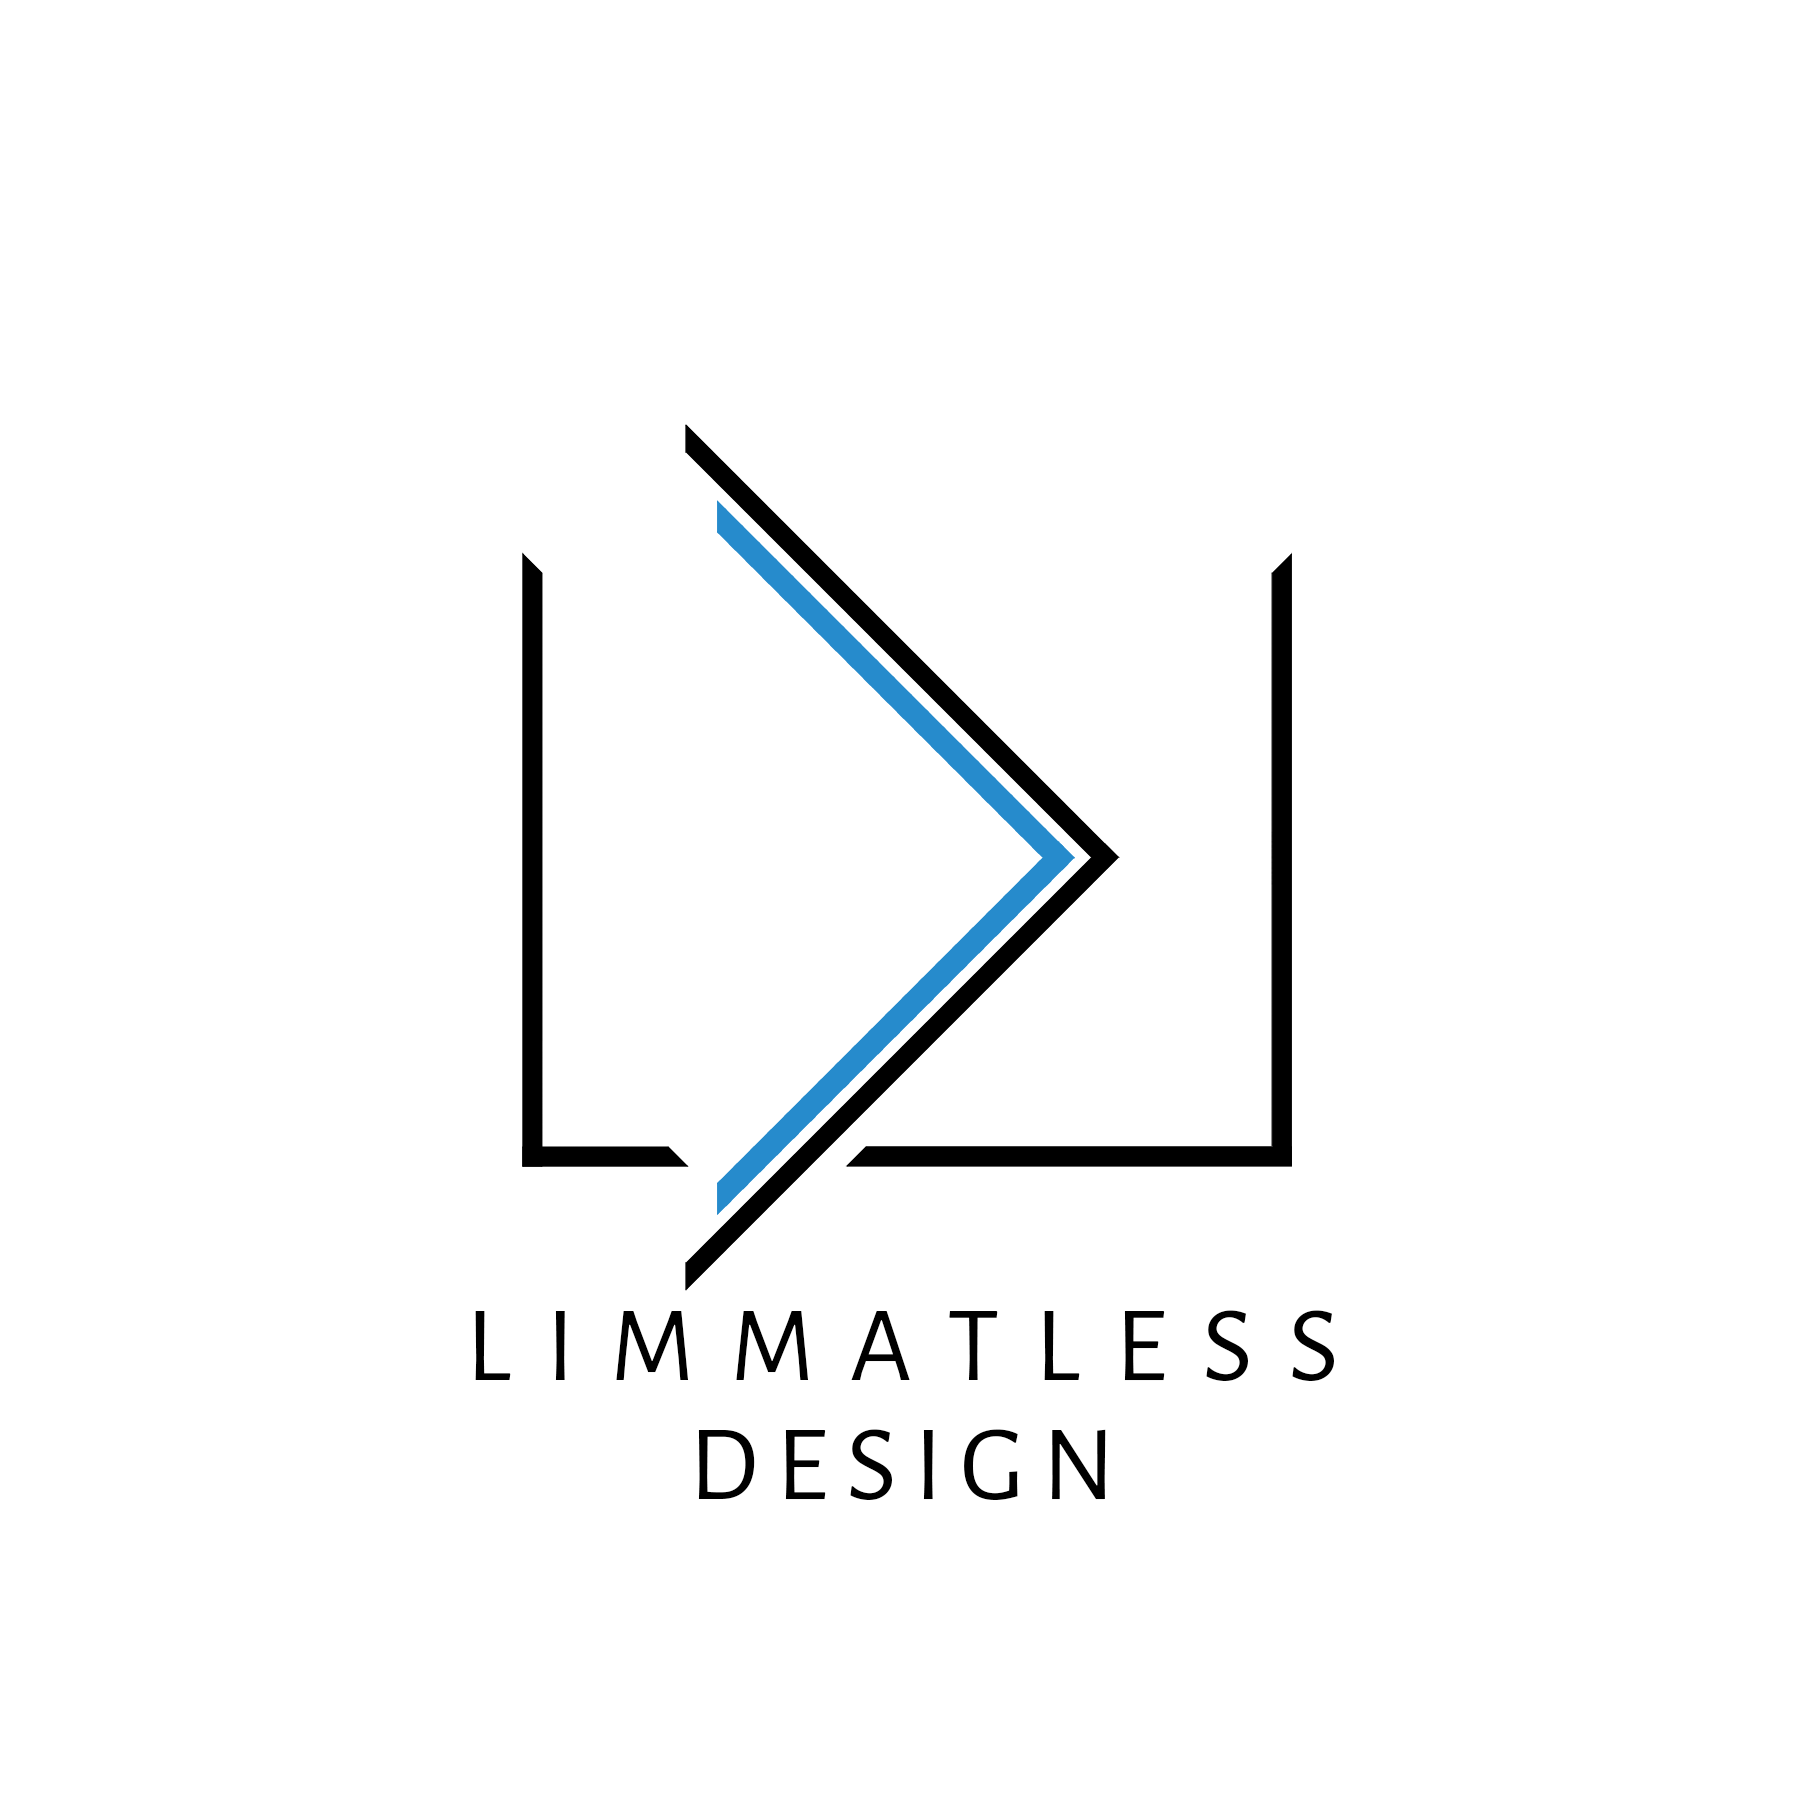 Limmatless Design Logo